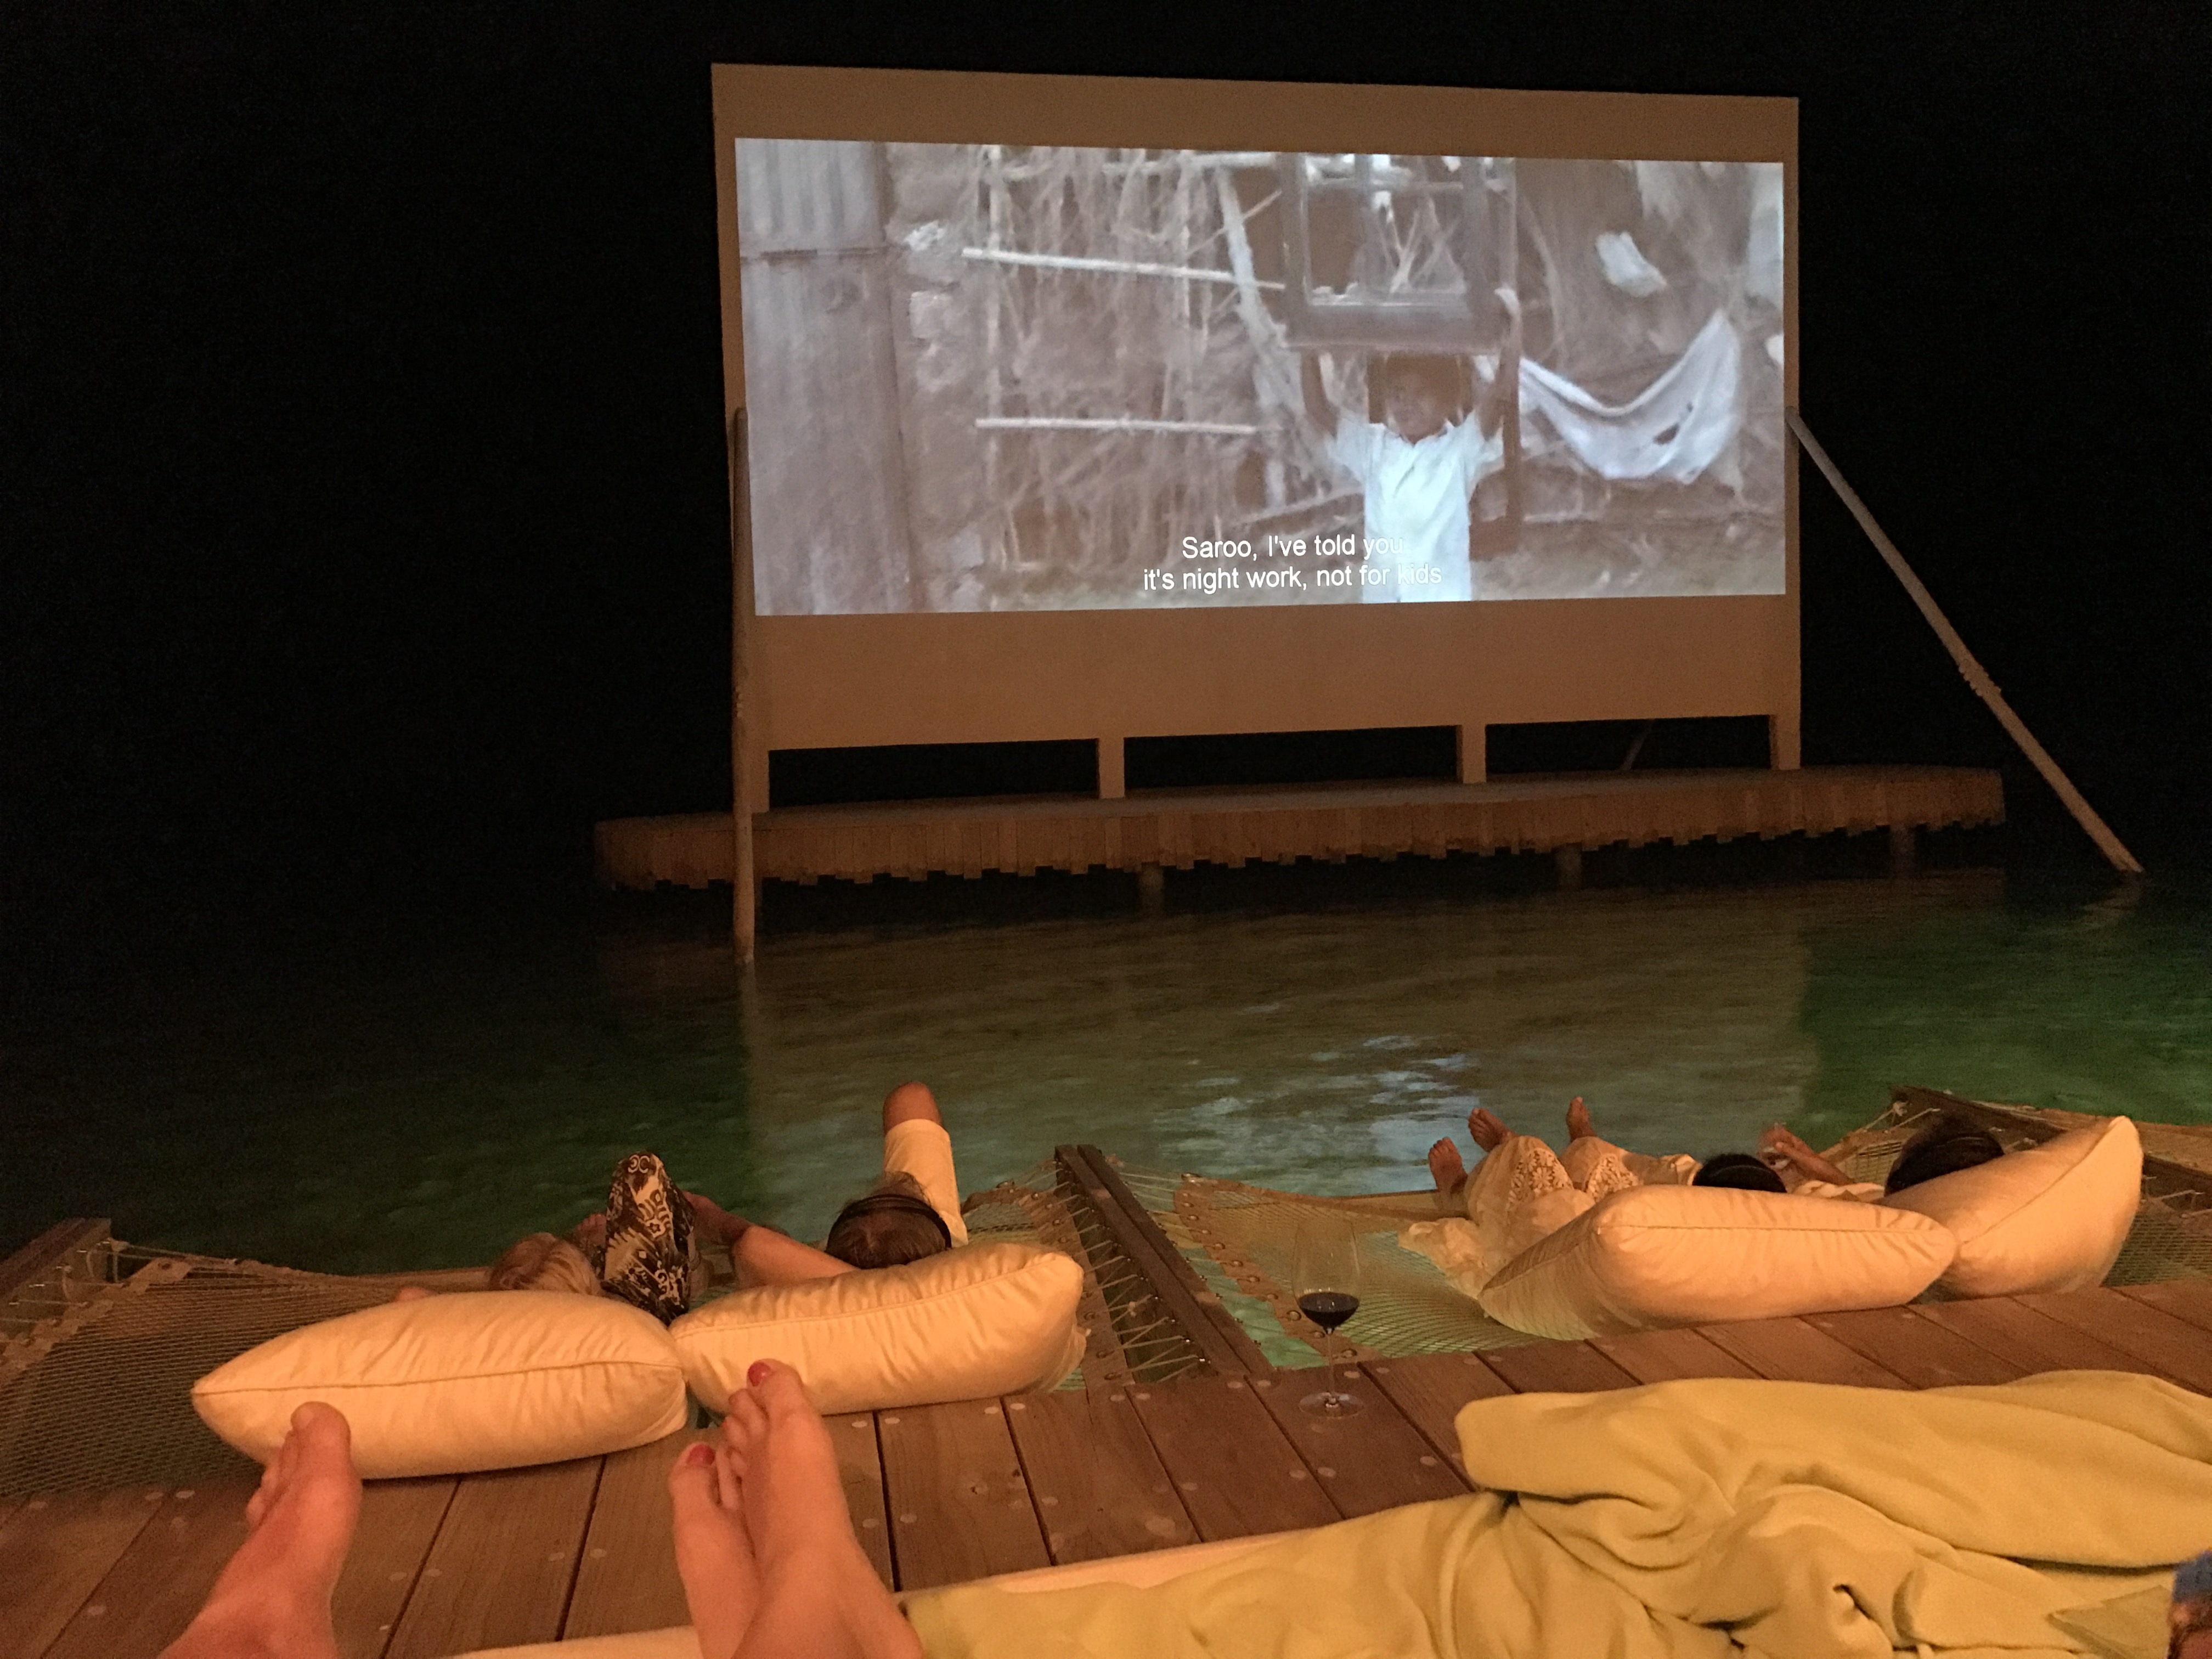 Overwater Bungalows Maldives Islands: Cinema Paradiso